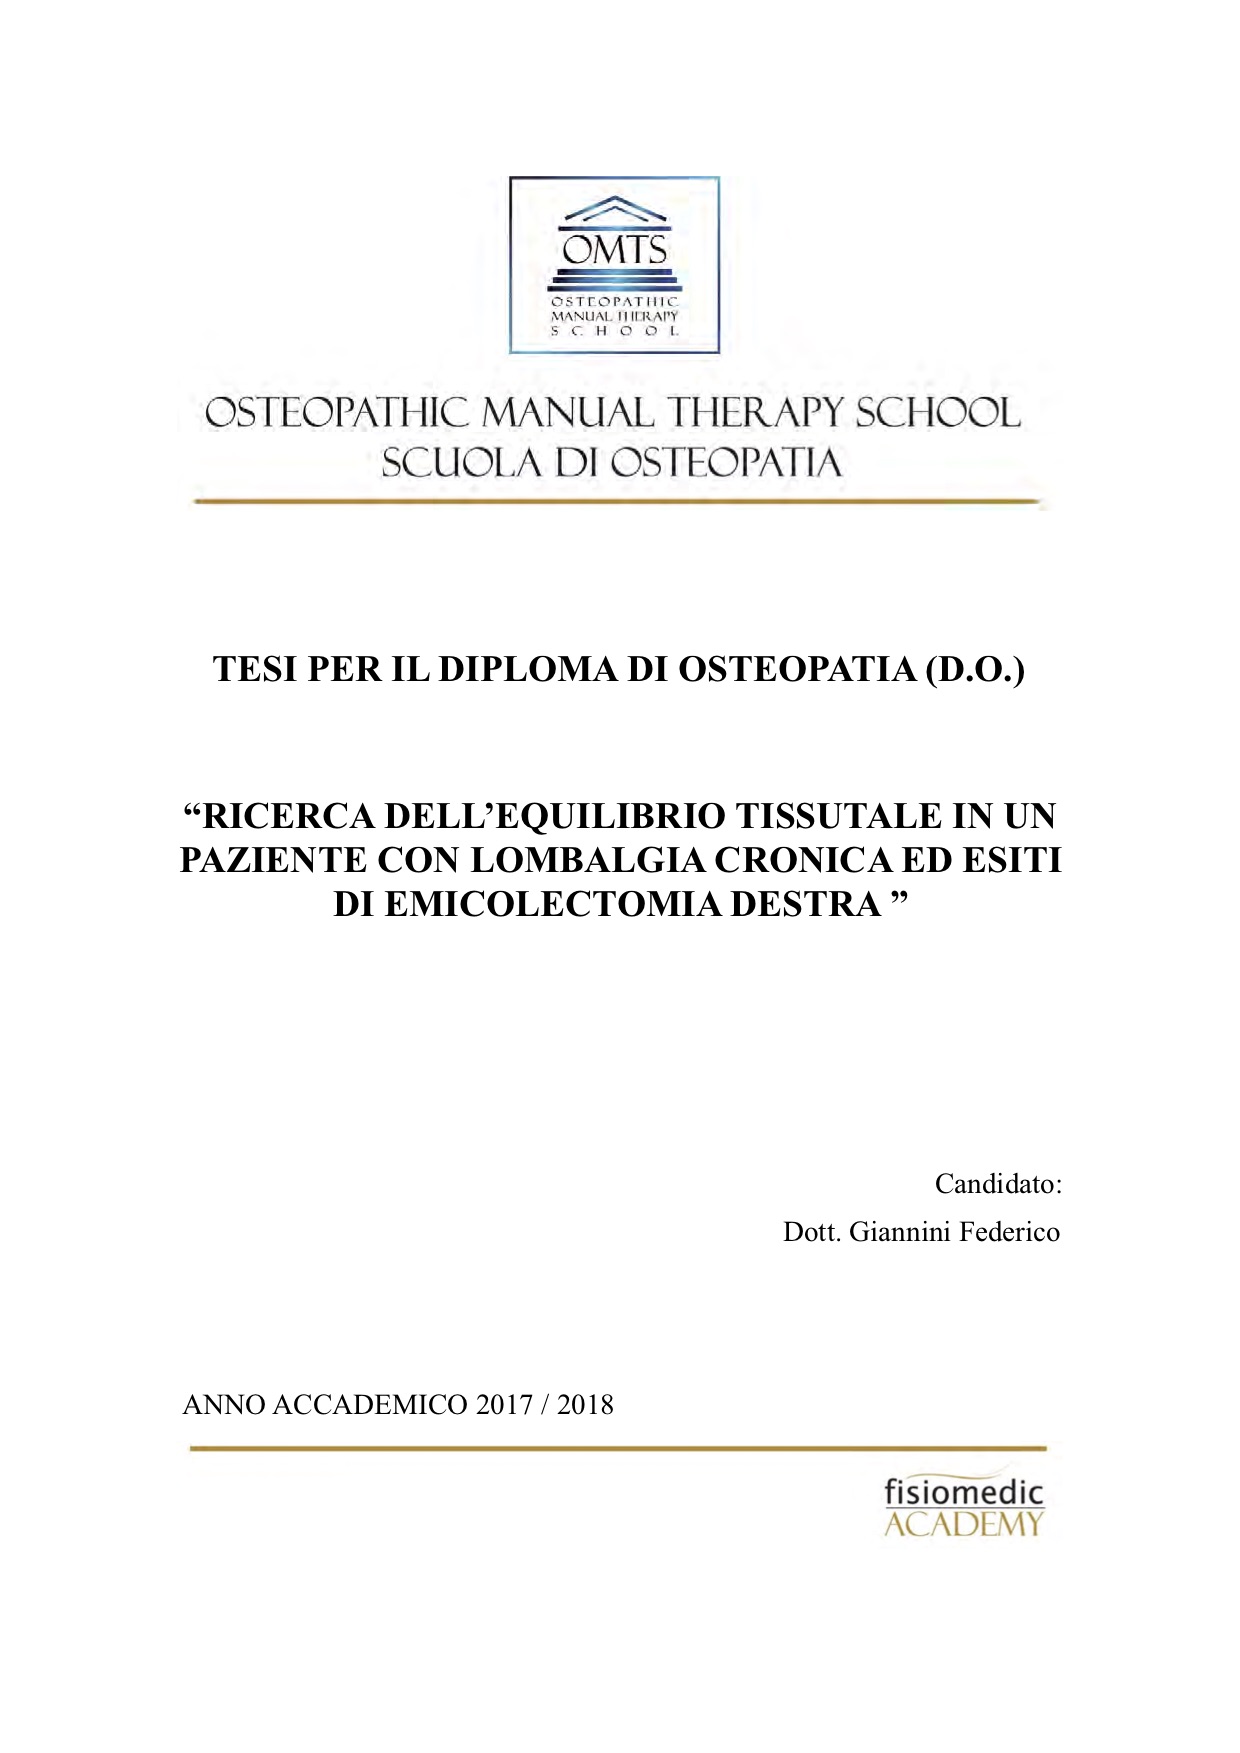 Federico Giannini Tesi Diploma Osteopatia 2018